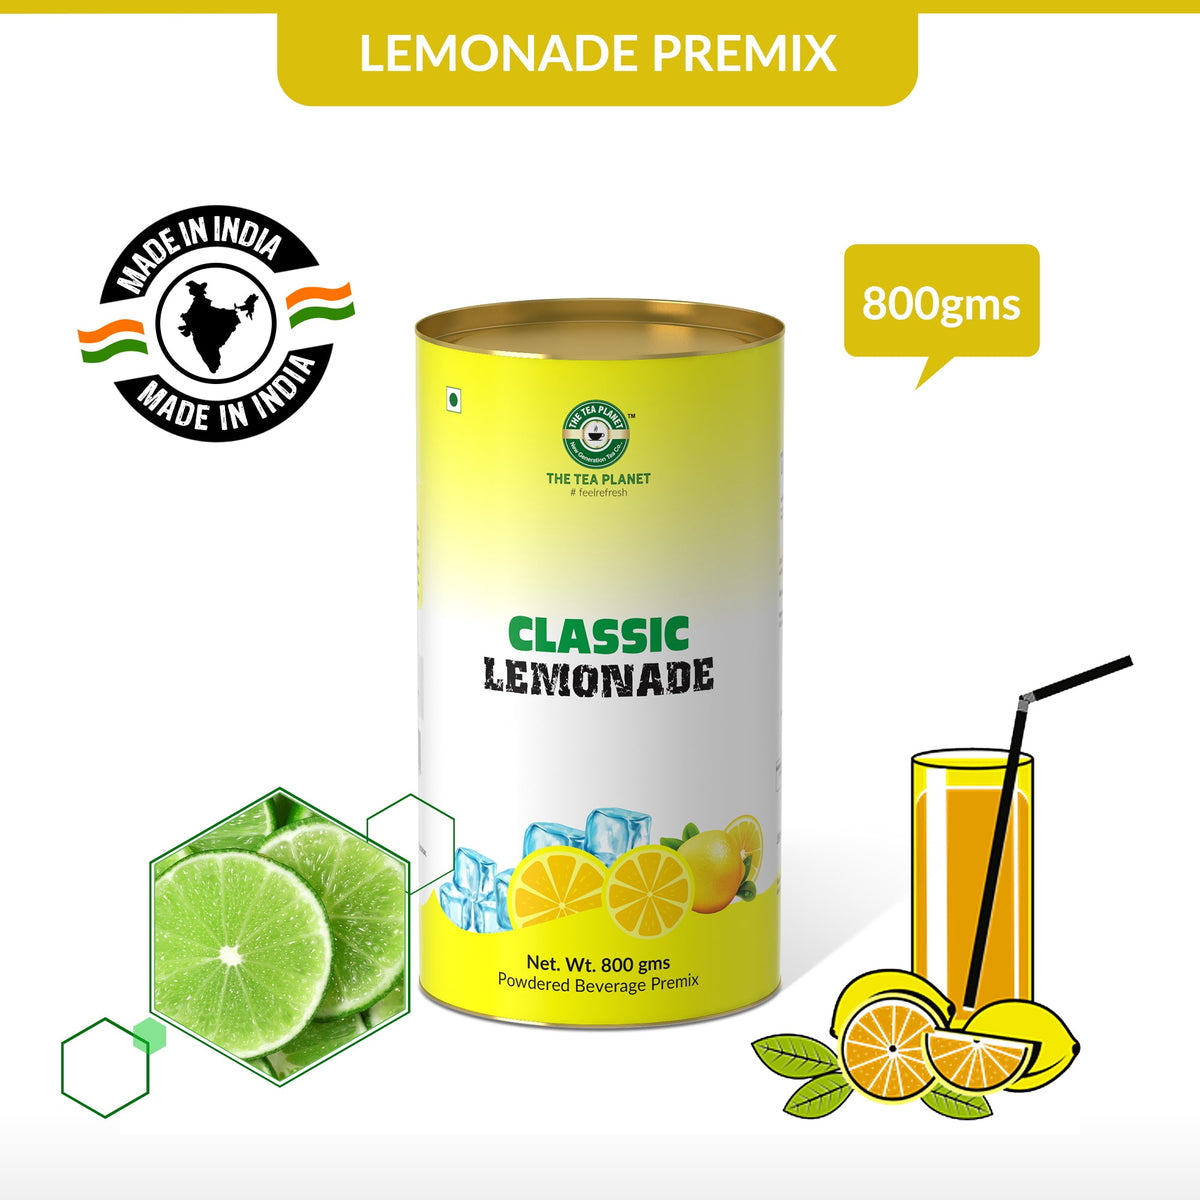 Classic Lemonade Premix